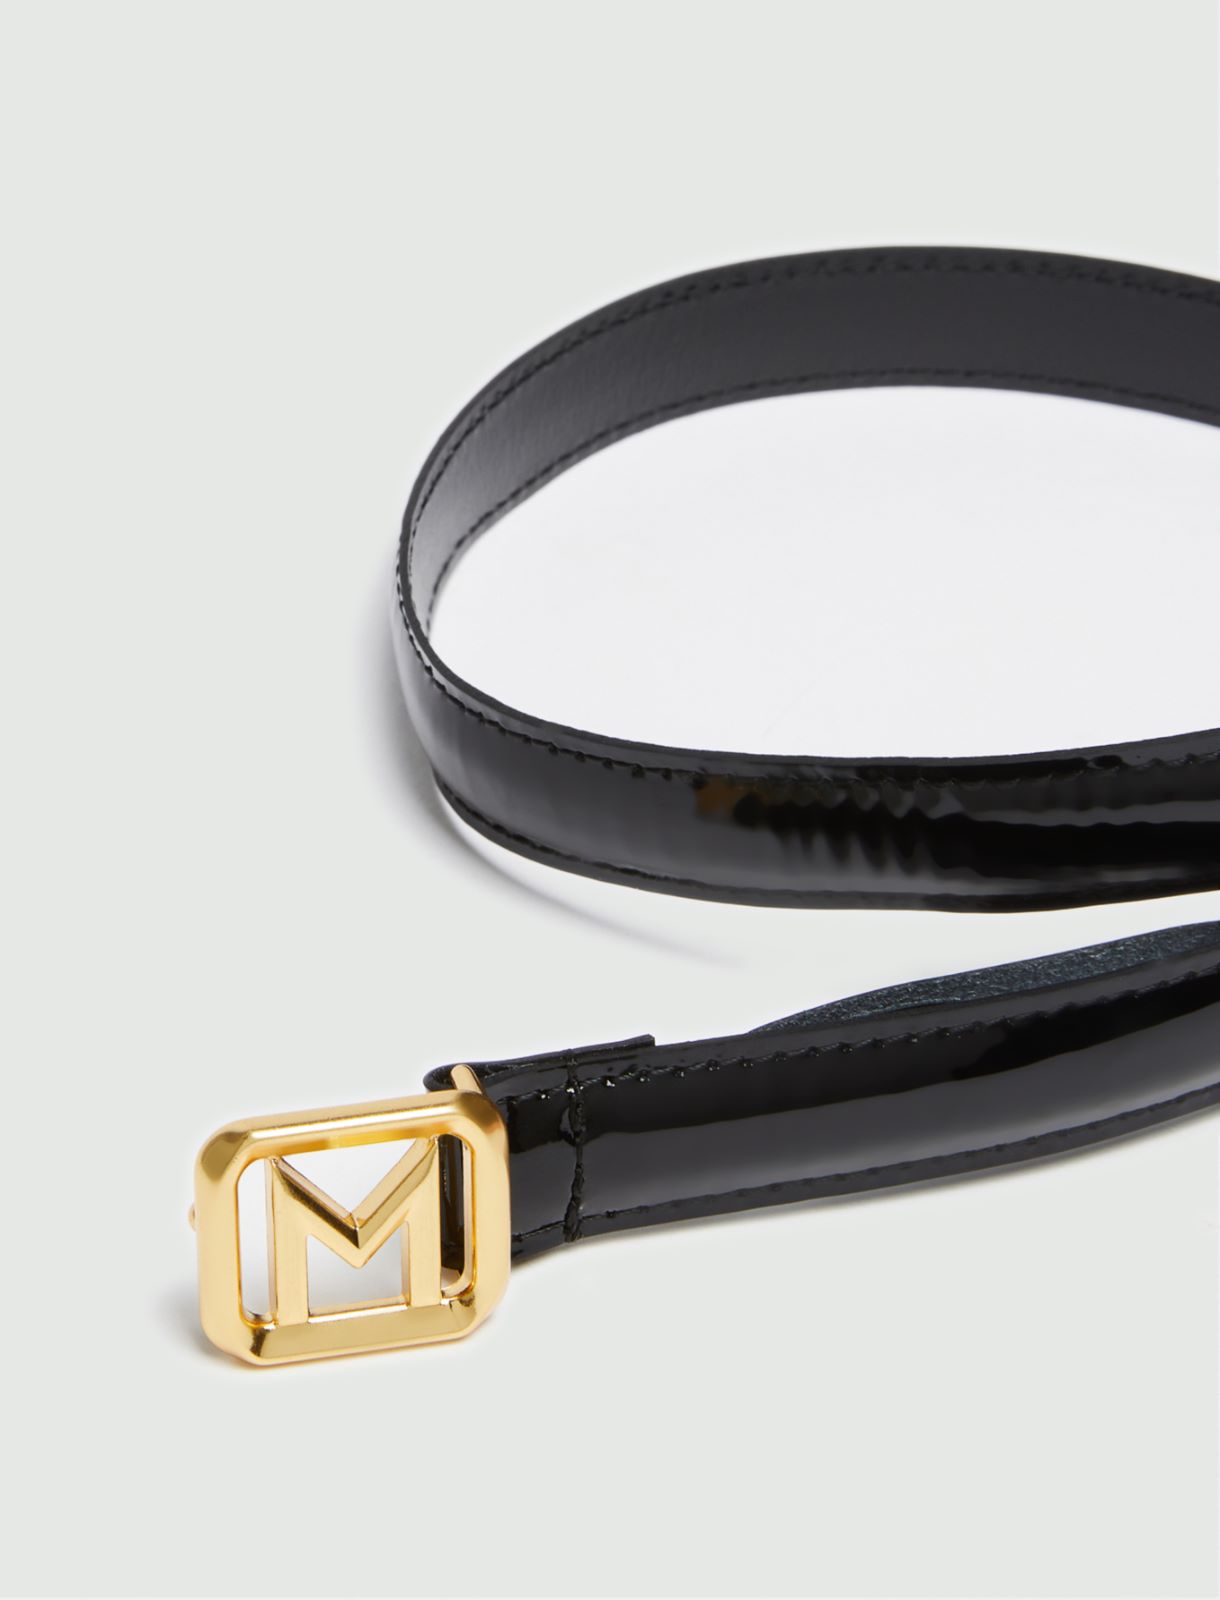 Patent leather belt - Black - Marella - 2